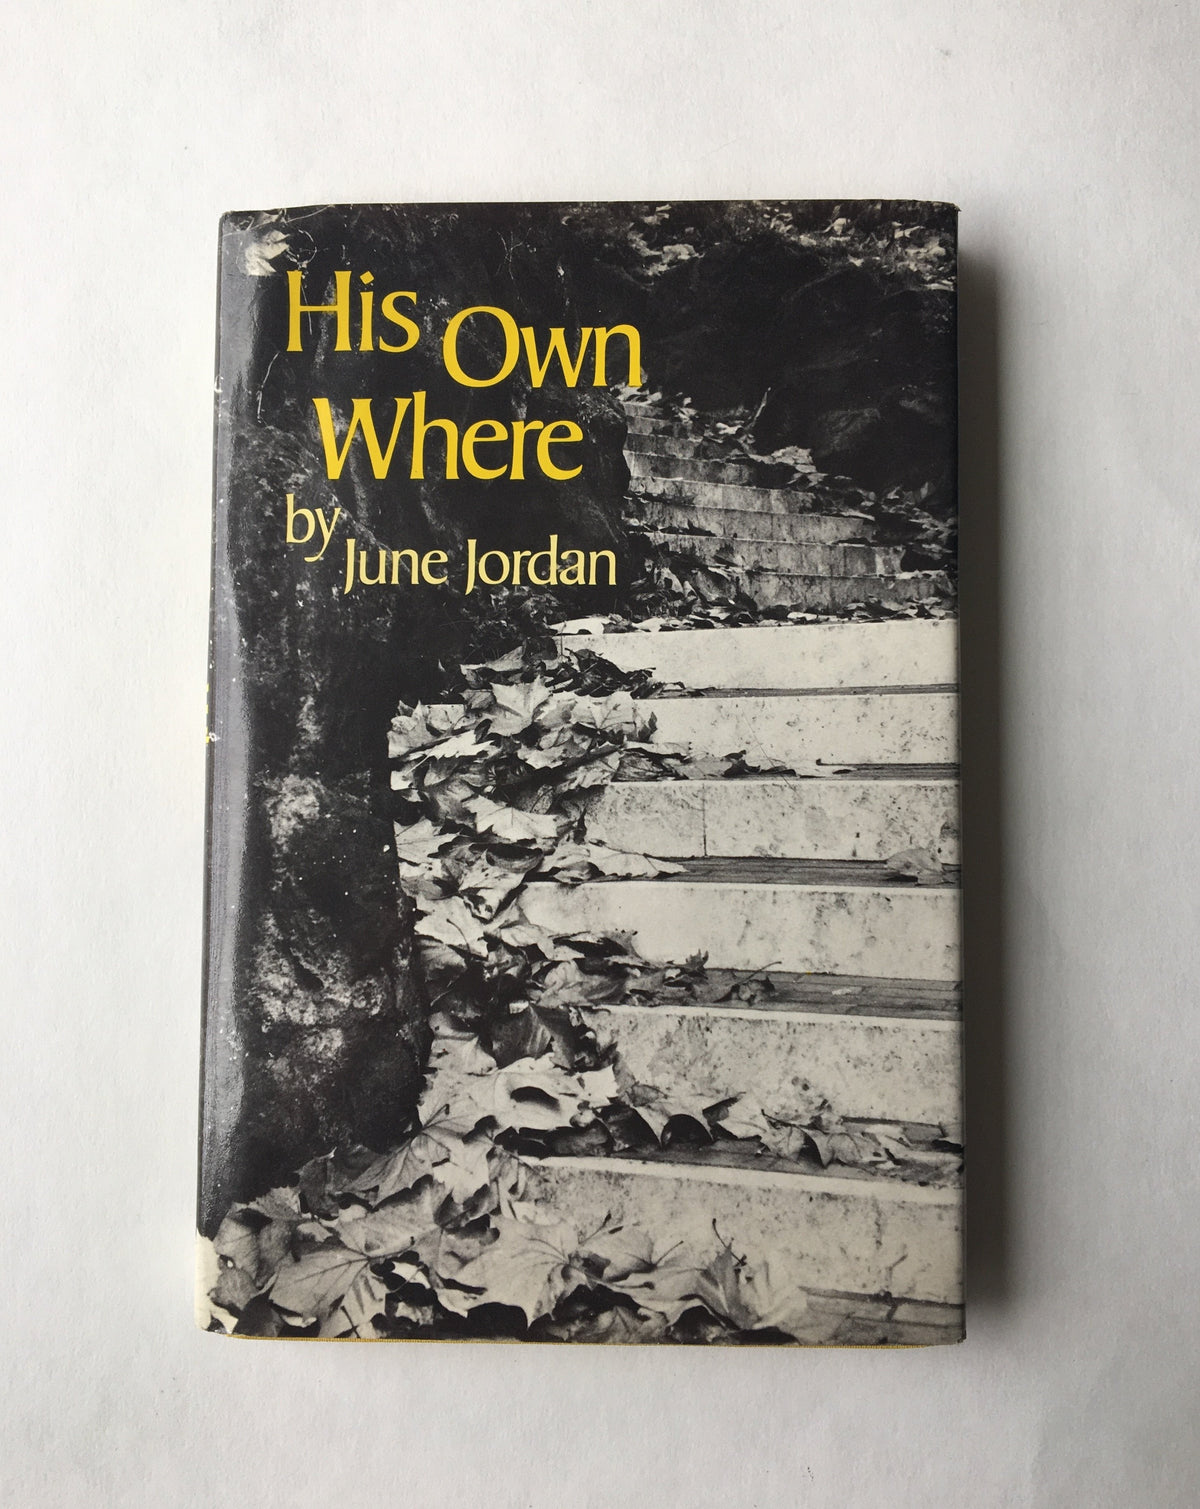 His Own Where by June Jordan